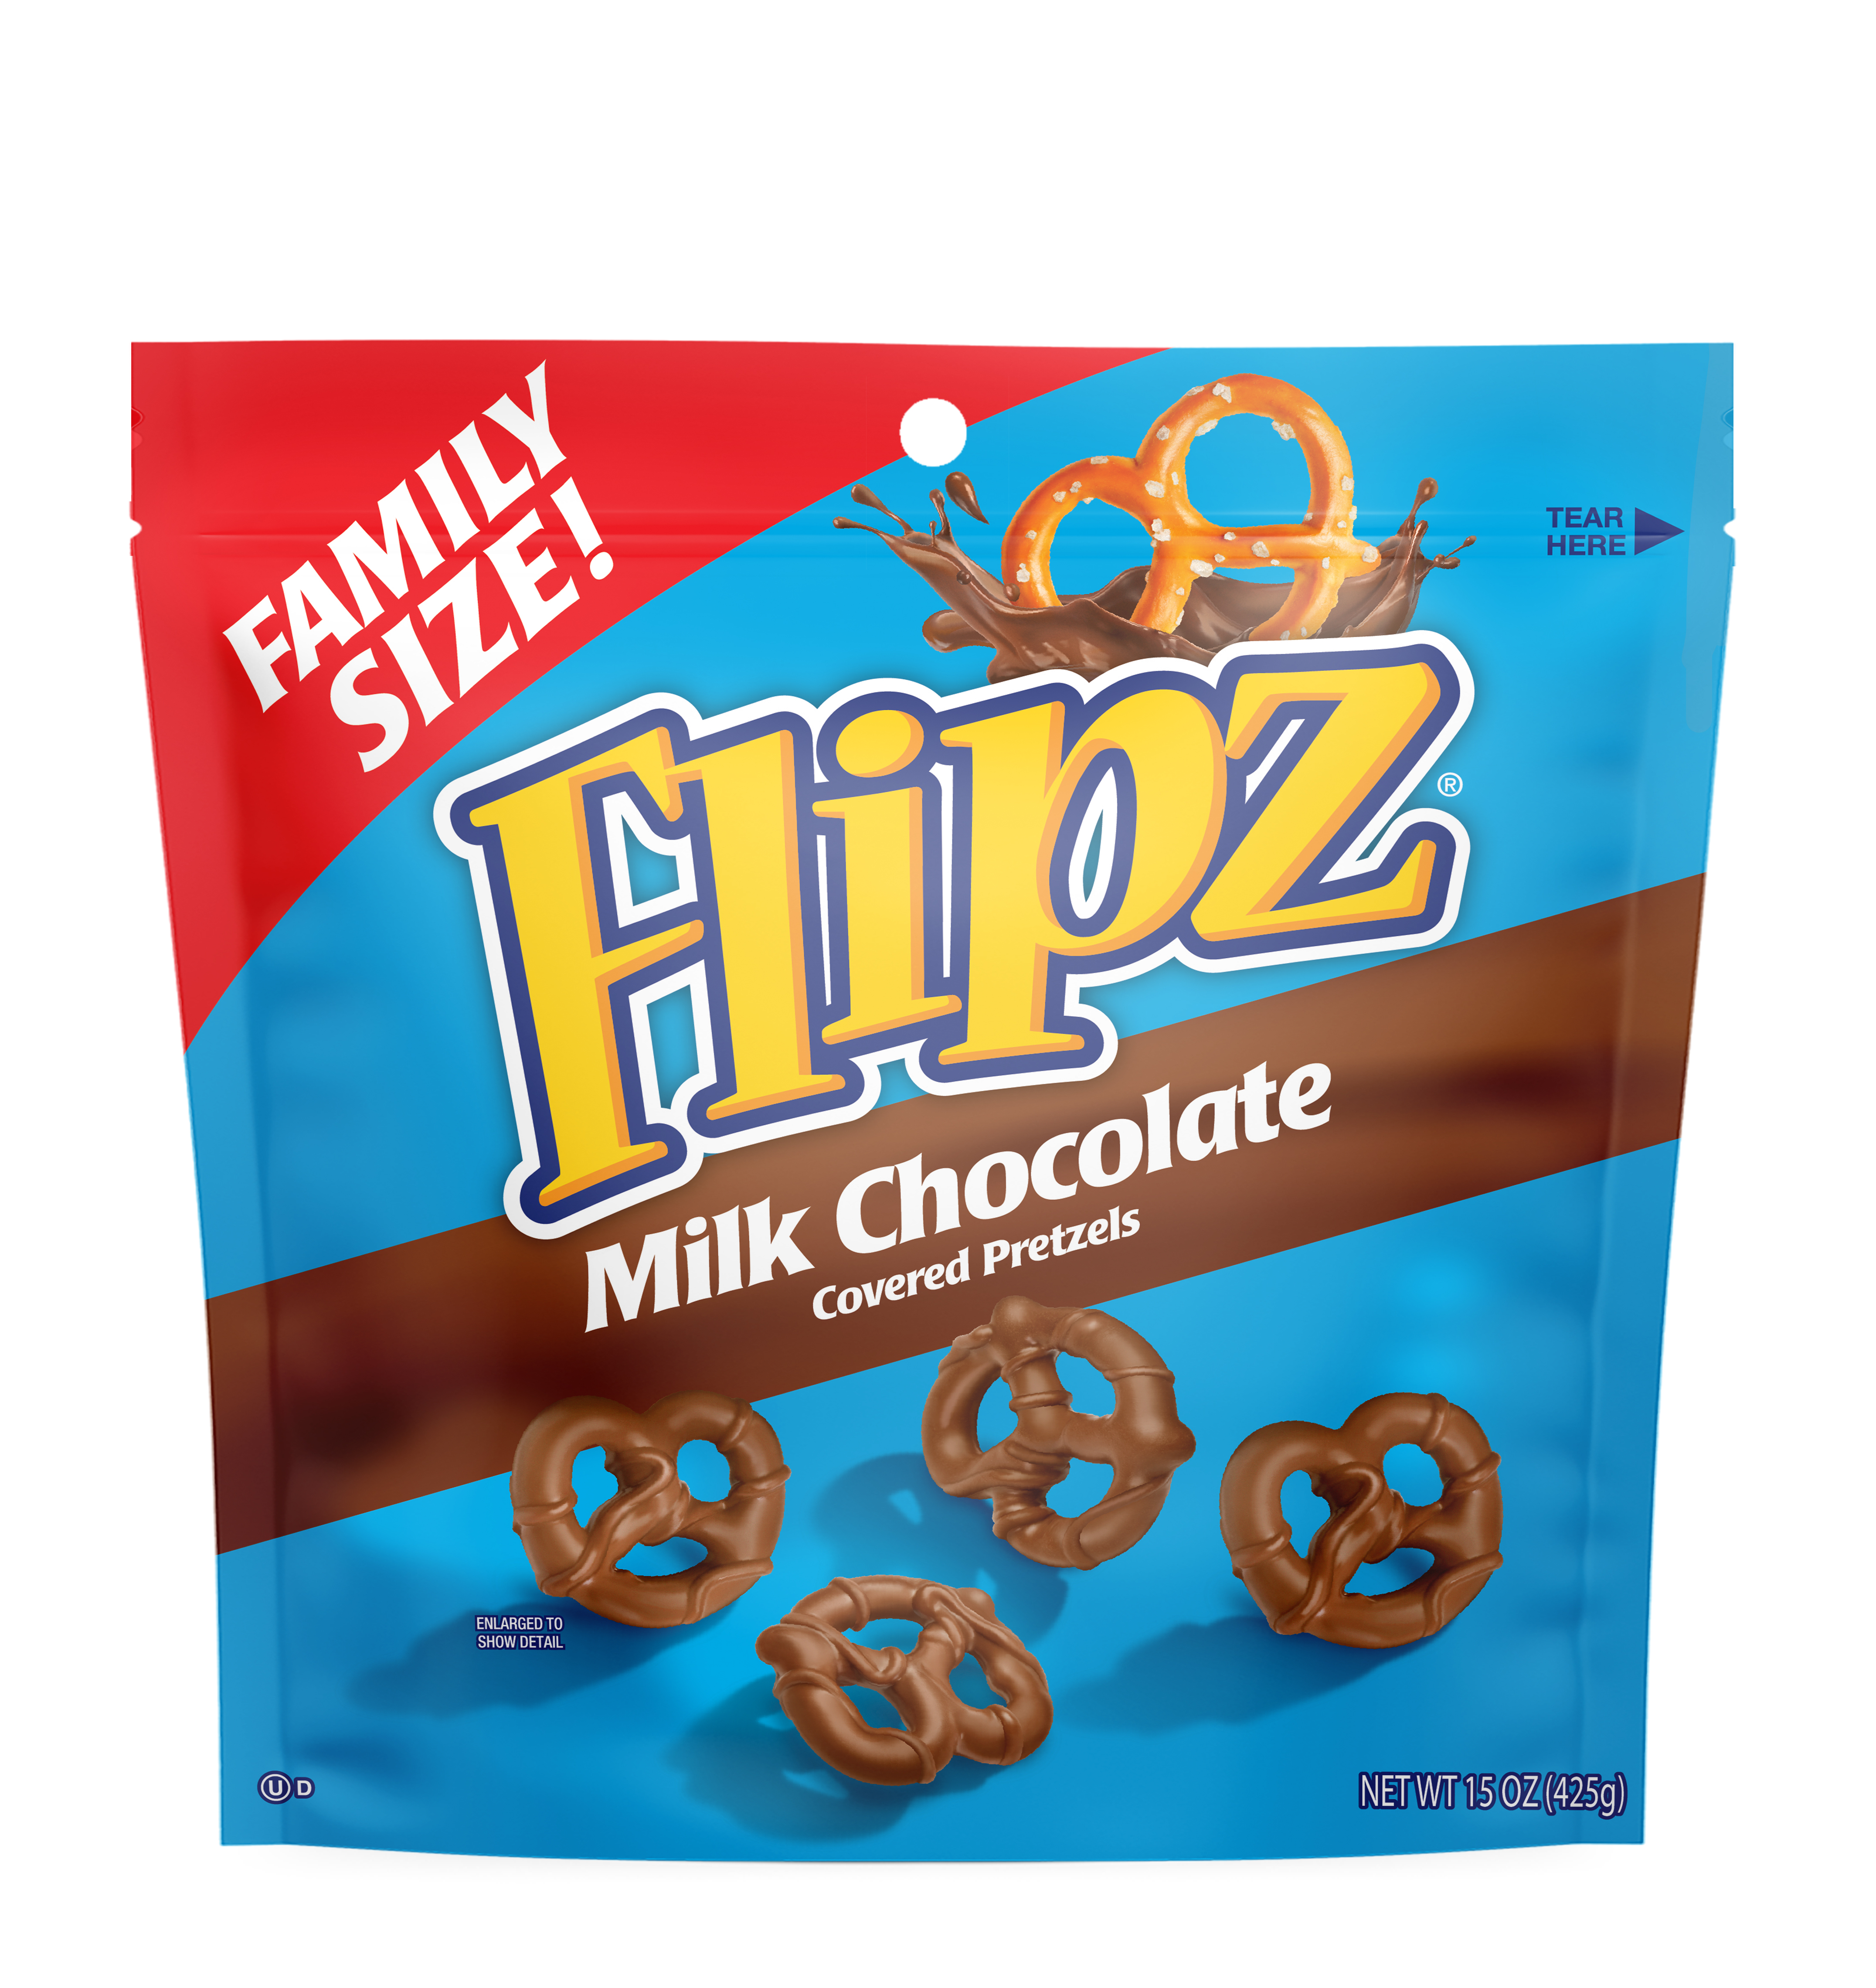 Flipz Milk Chocolate Covered Pretzels, Family Size, 15 oz - image 1 of 4